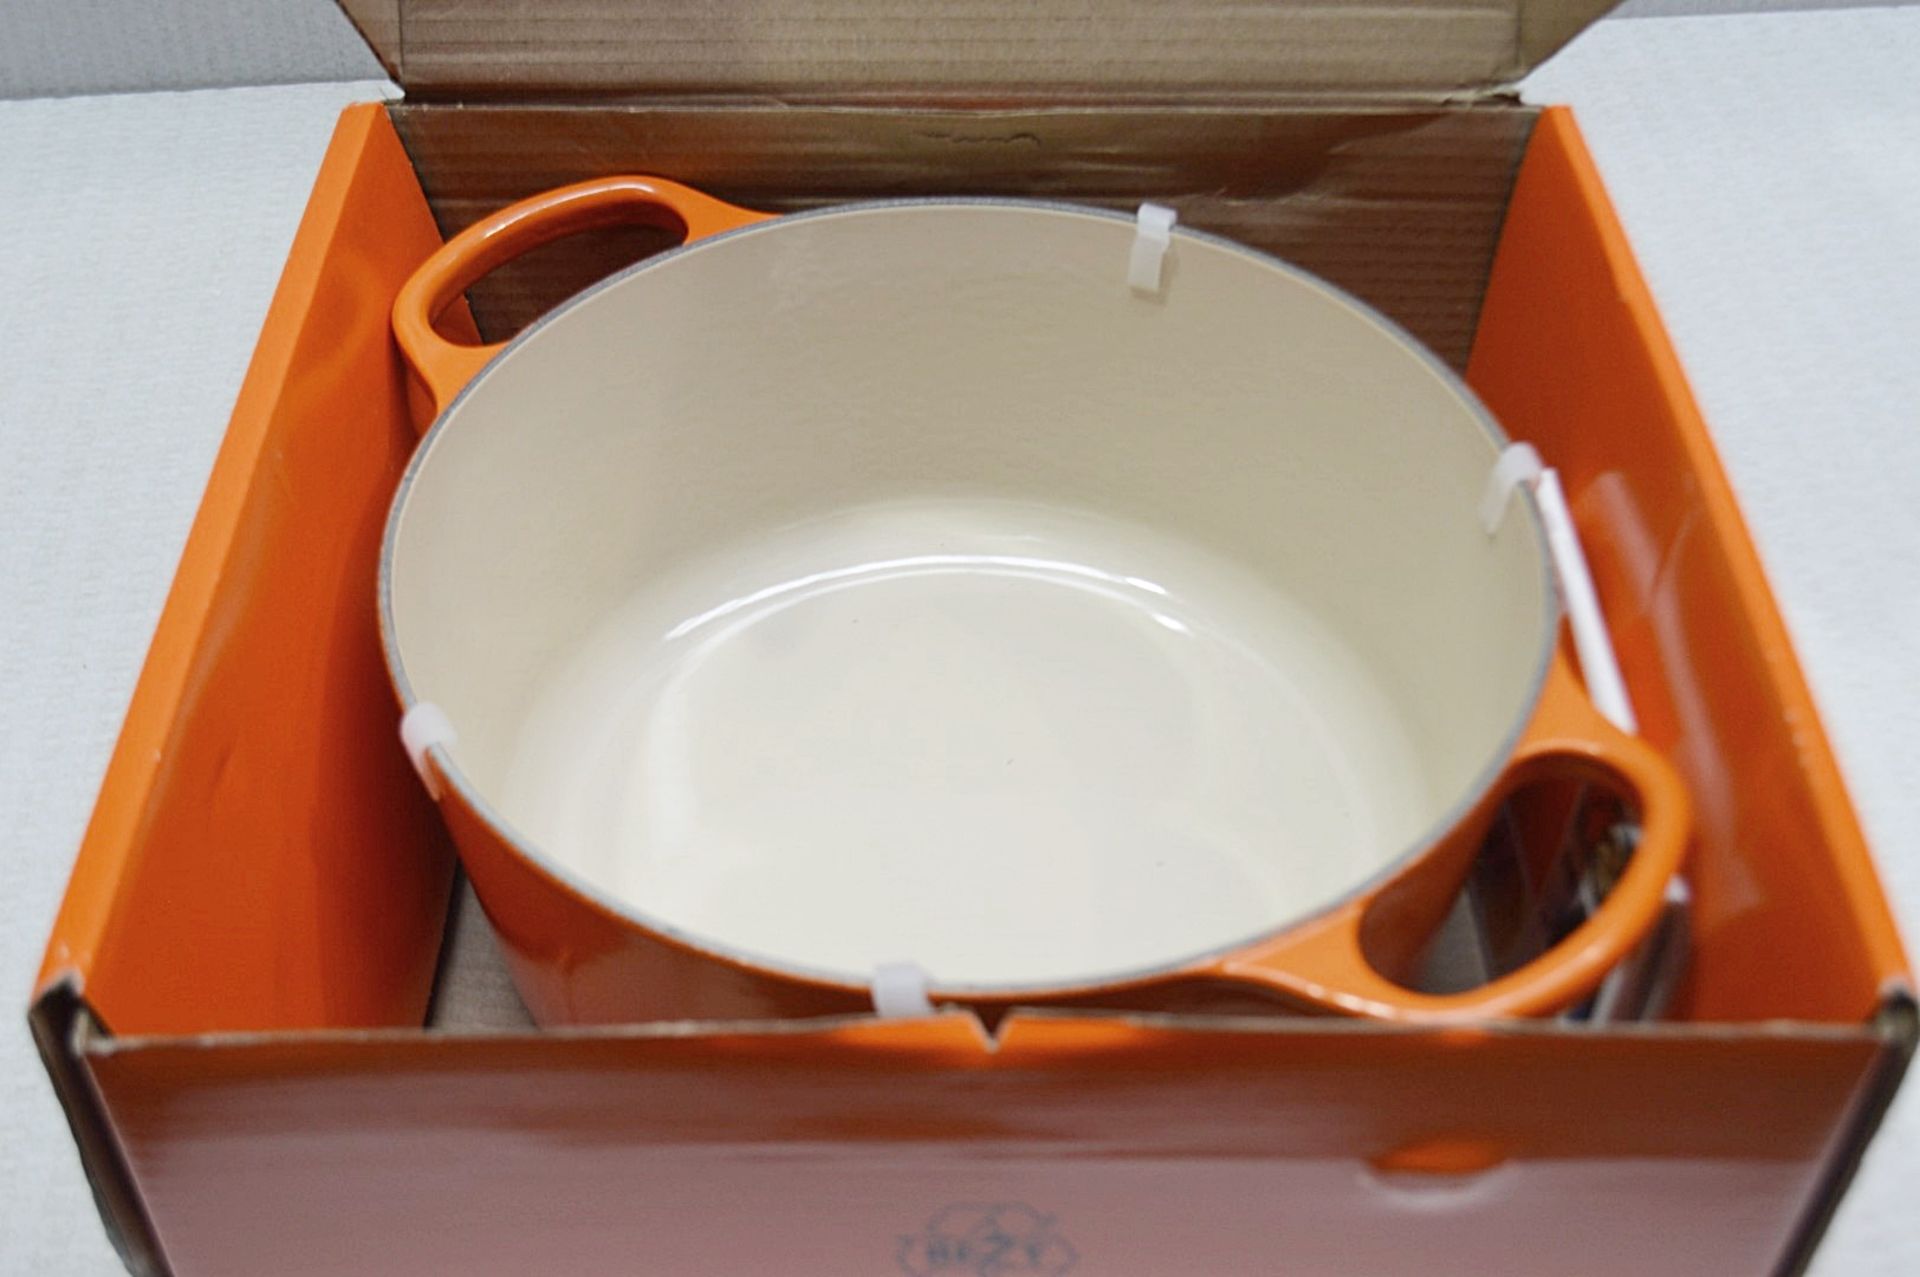 1 x Le Creuset Enamelled Cast Iron 28cm Casserole Dish In Volcanic Flame Orange - RRP £305.00 - Image 5 of 6